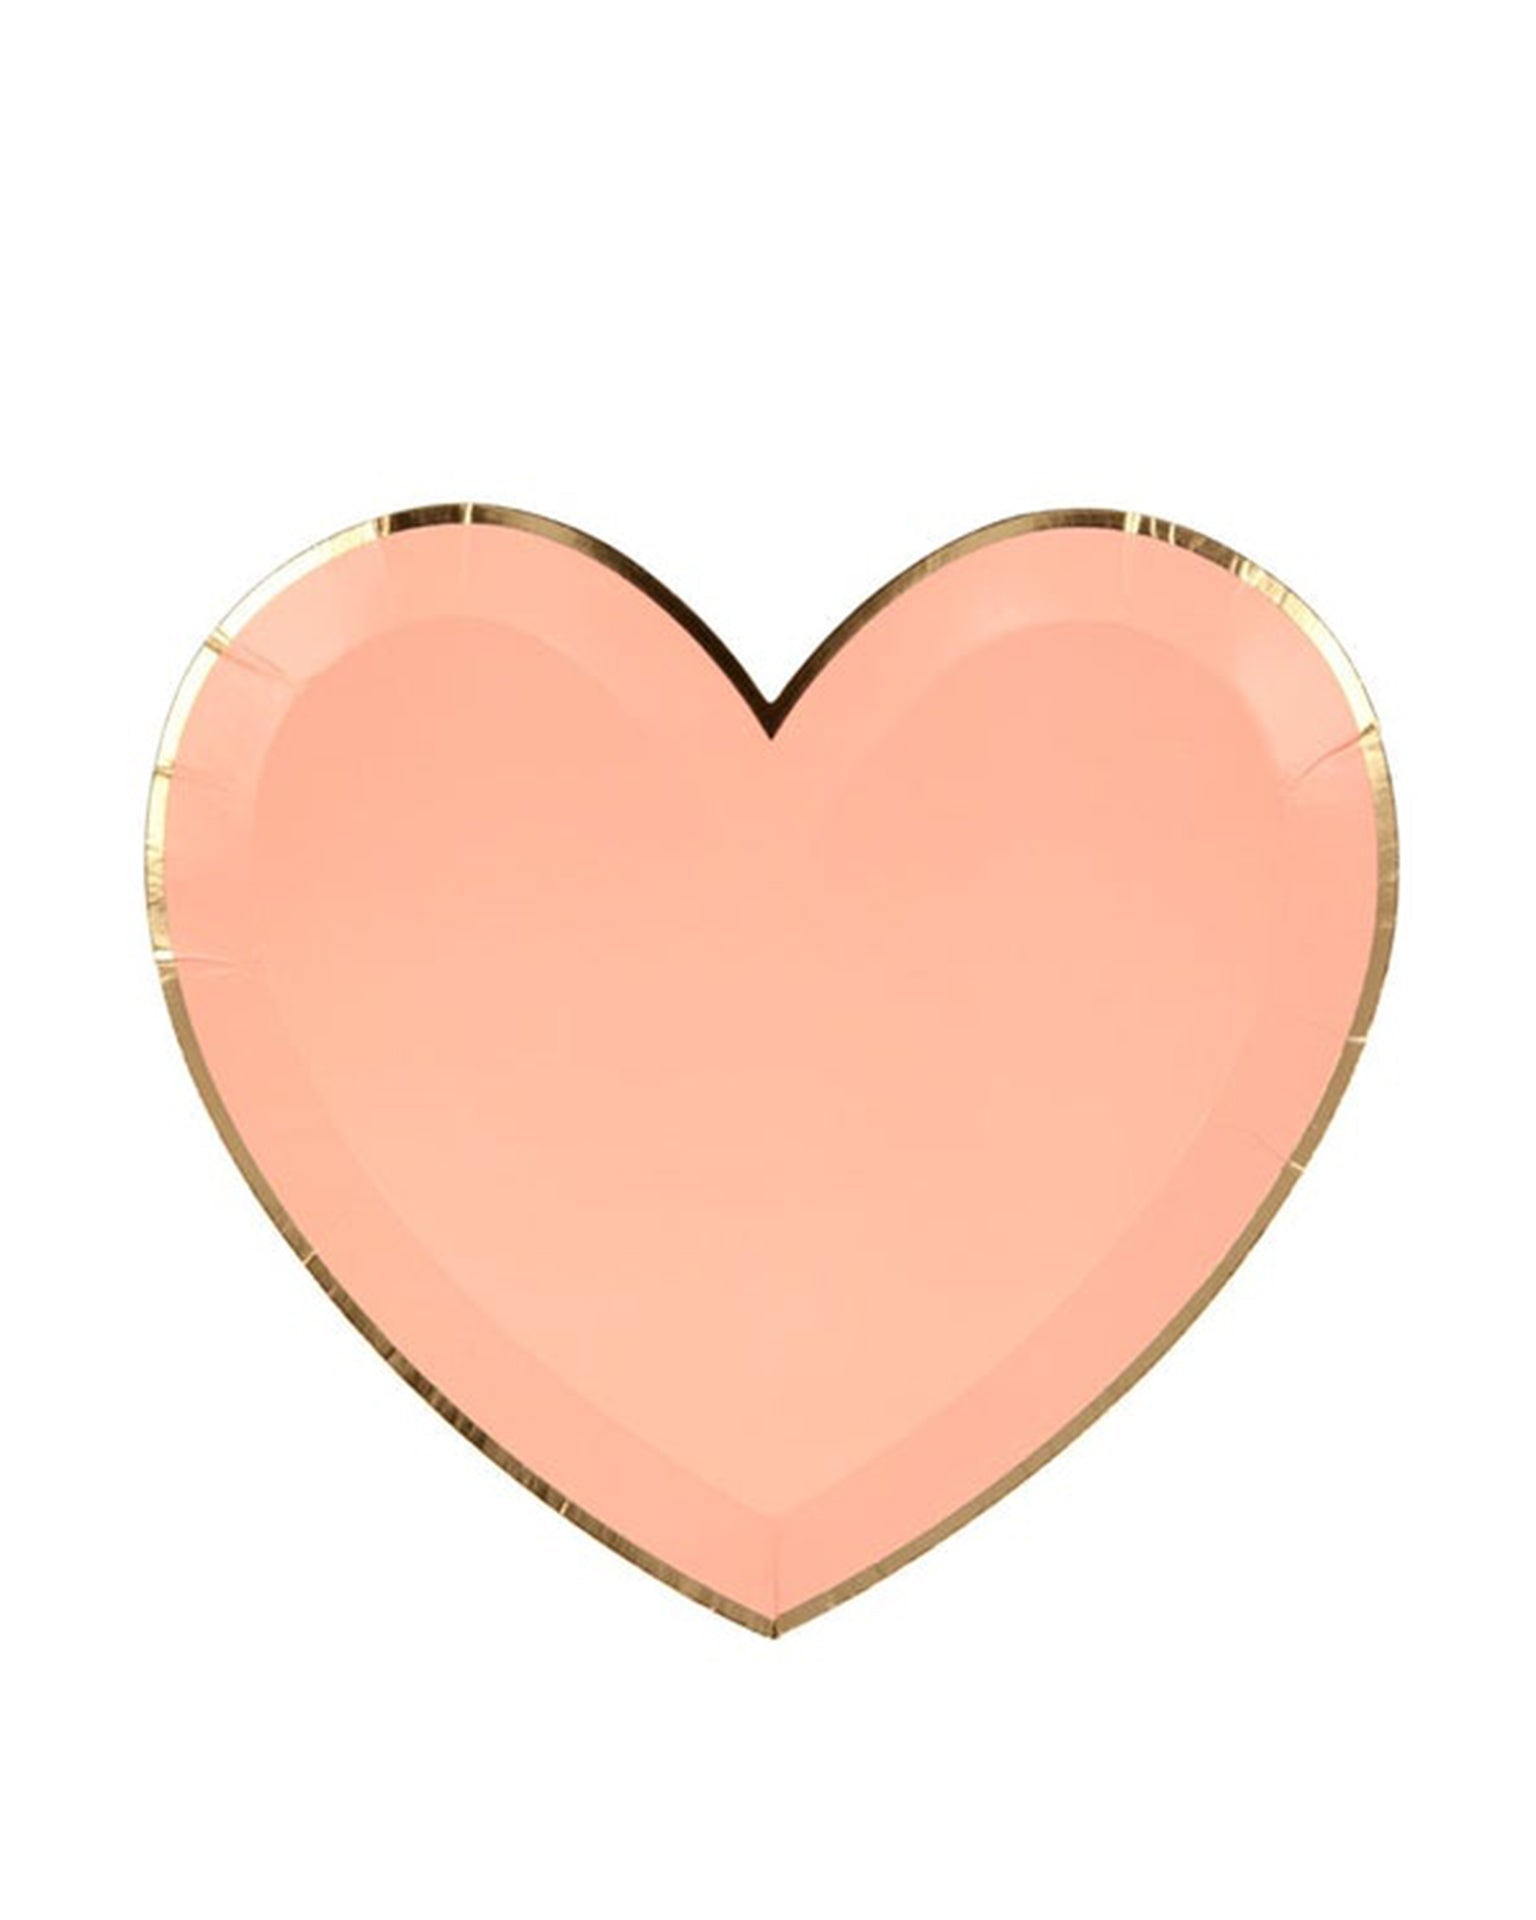 Little meri meri paper + party small pink heart plates